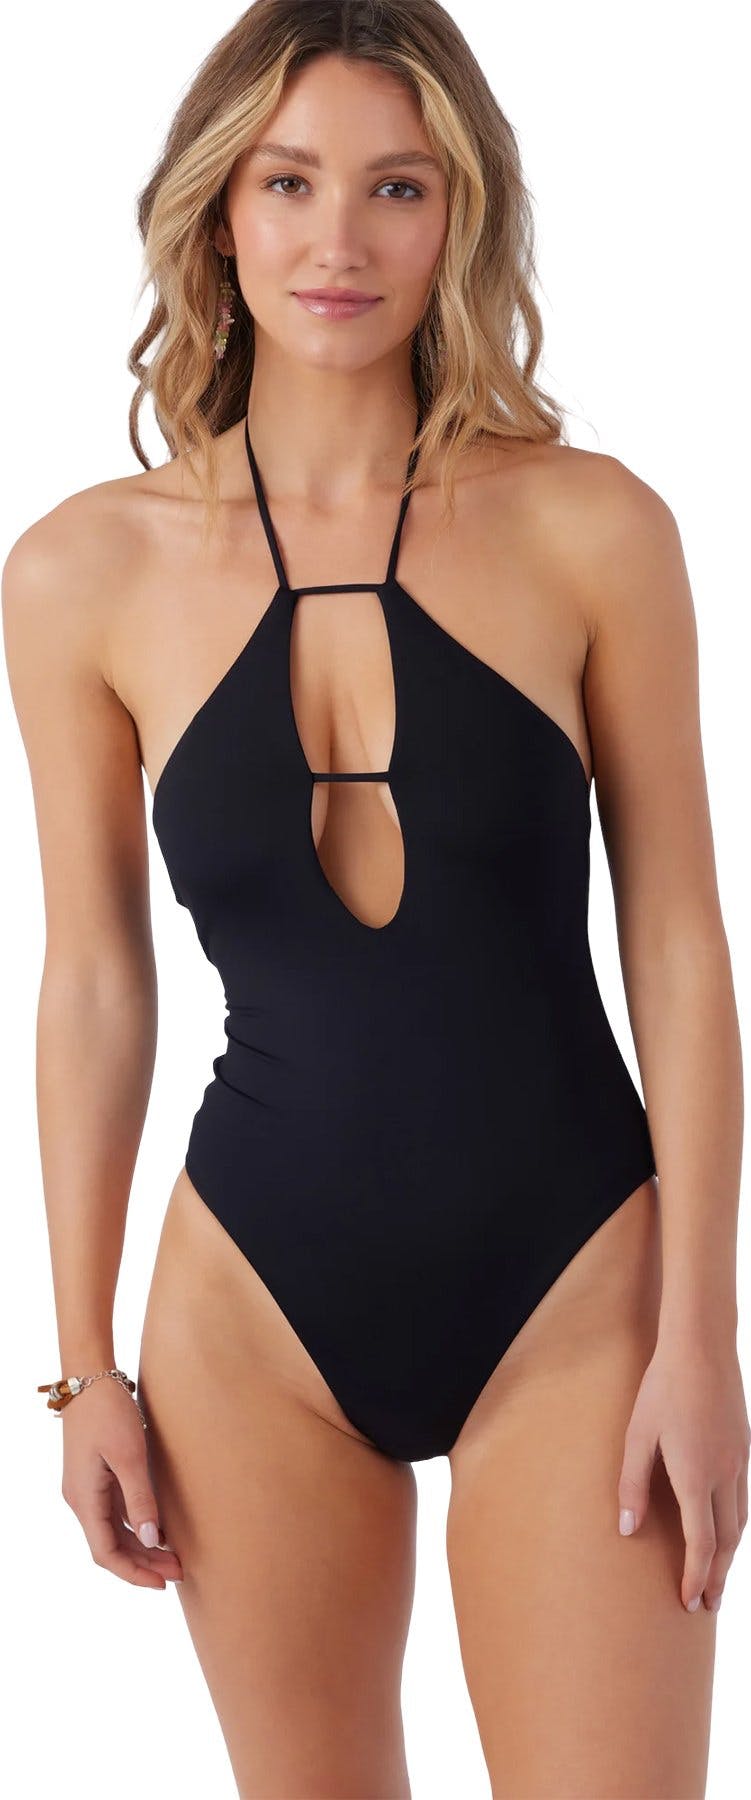 Product image for Saltwater Solids Santa Cruz Halter One Piece Swimsuit - Women's